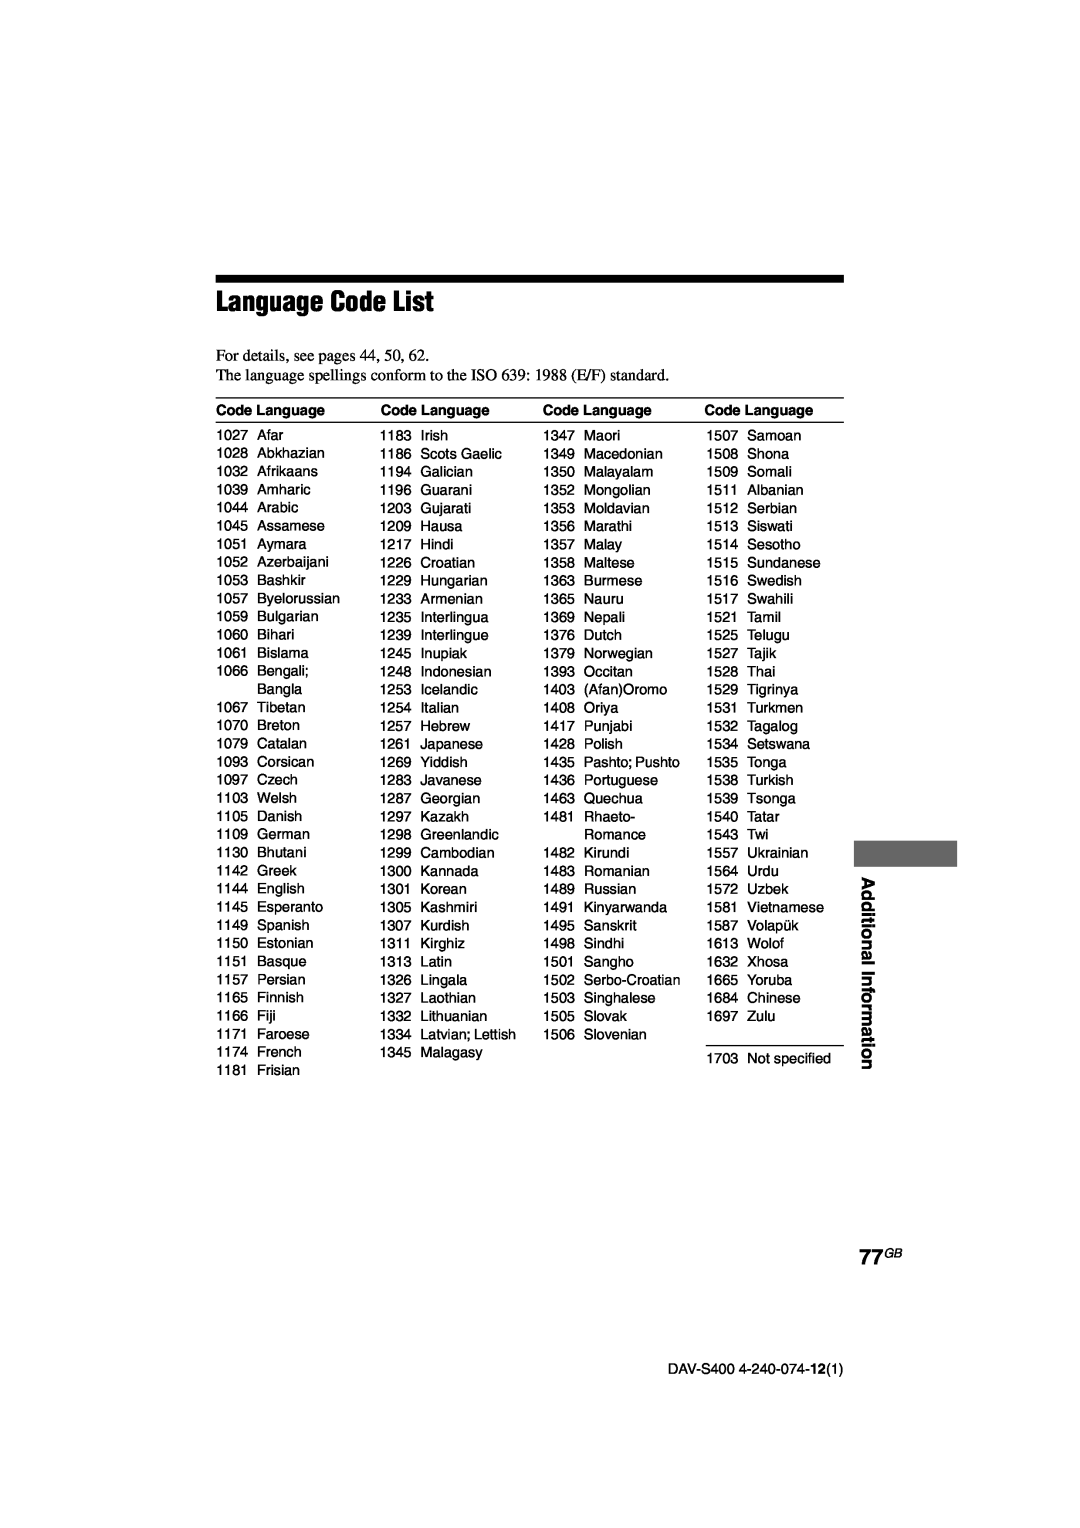 Sony DAV-S400 manual Language Code List, 77GB, Additional Information, Code Language 